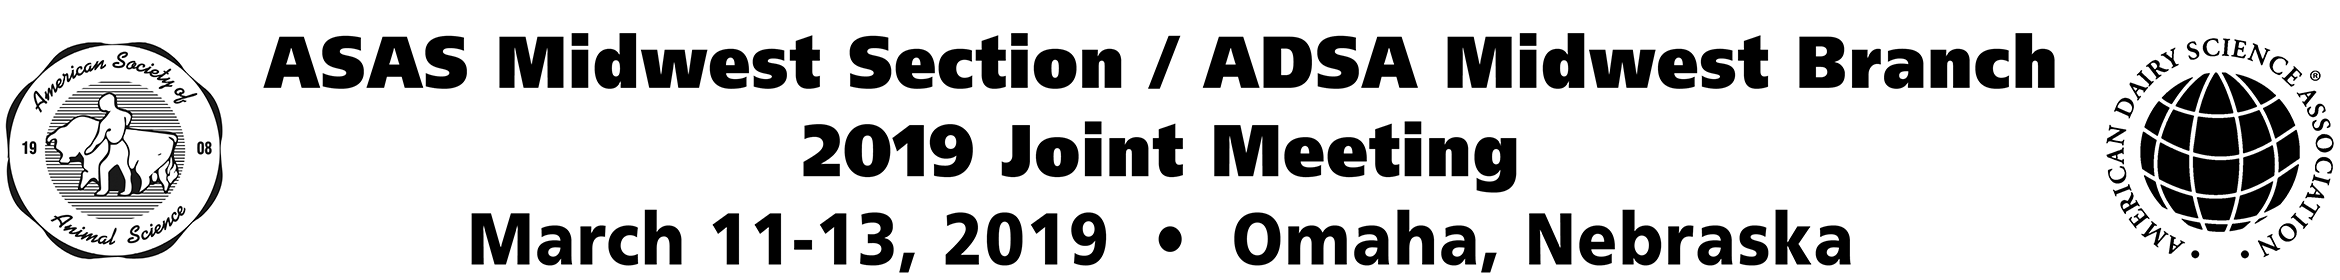 2019 ADSA ASAS Midwest Meeting Main banner